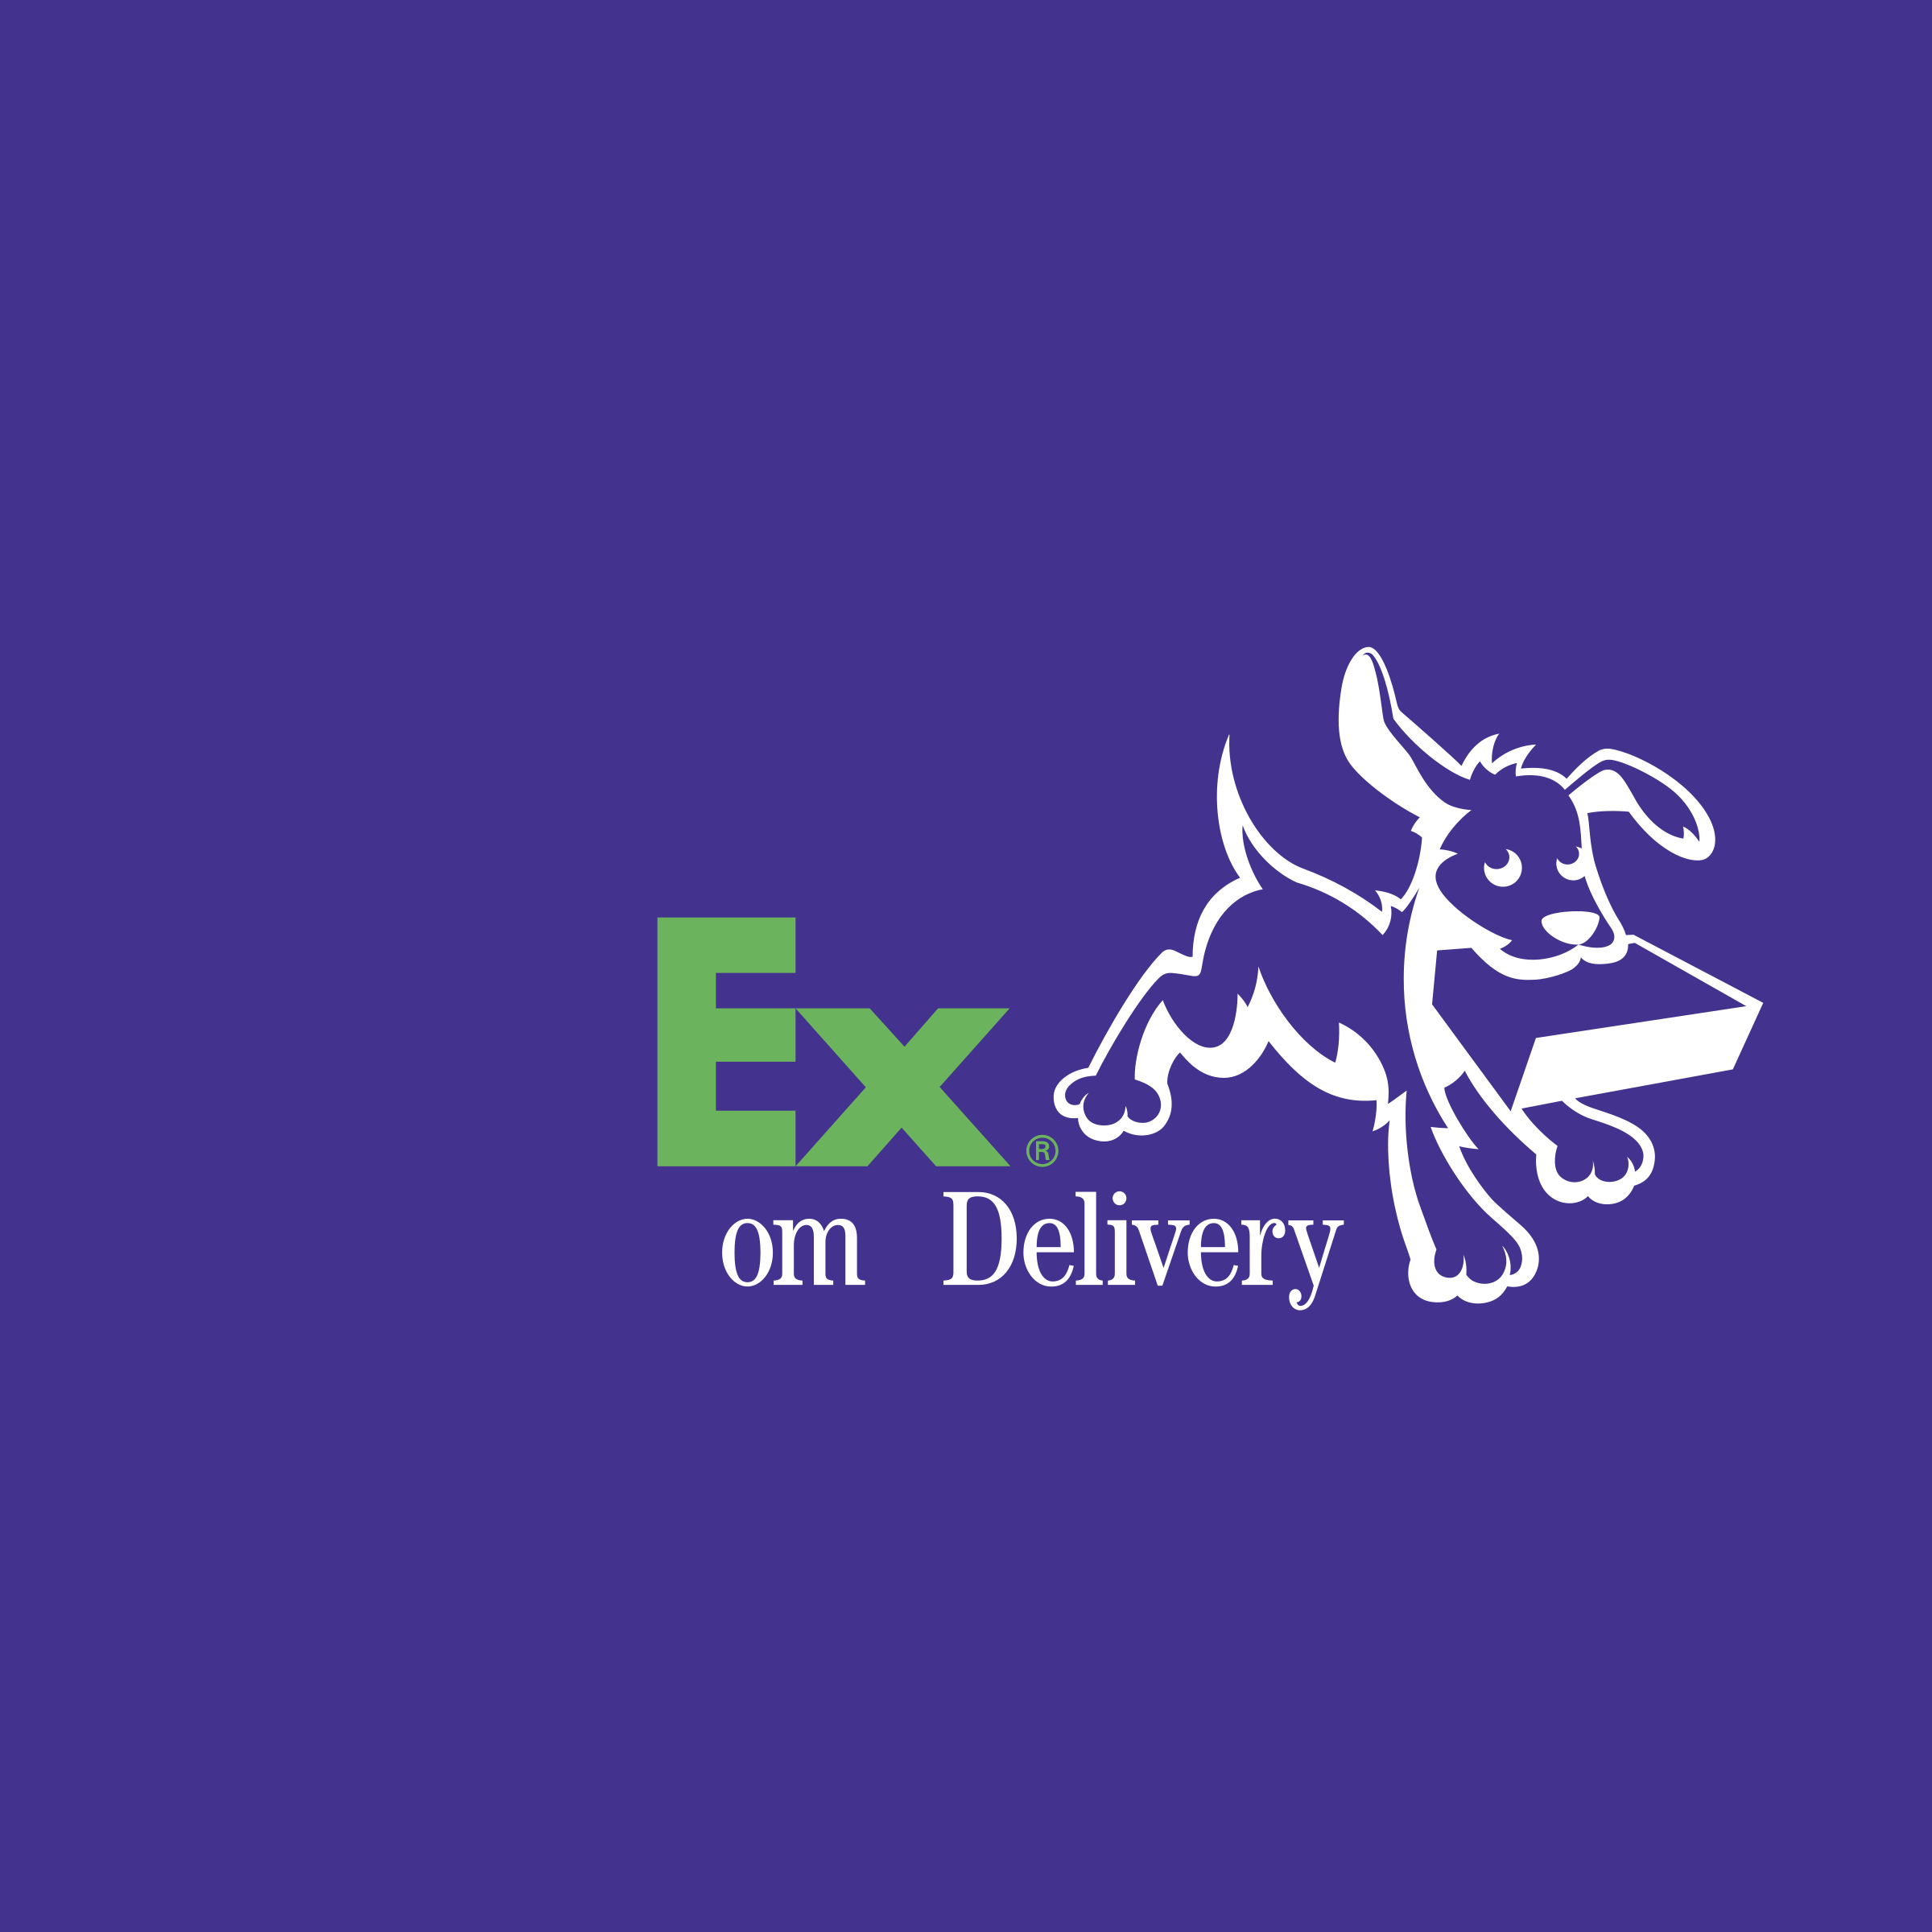 FedEx Home Delivery Logo - FedEx Home Delivery Logo PNG Transparent & SVG Vector - Freebie Supply